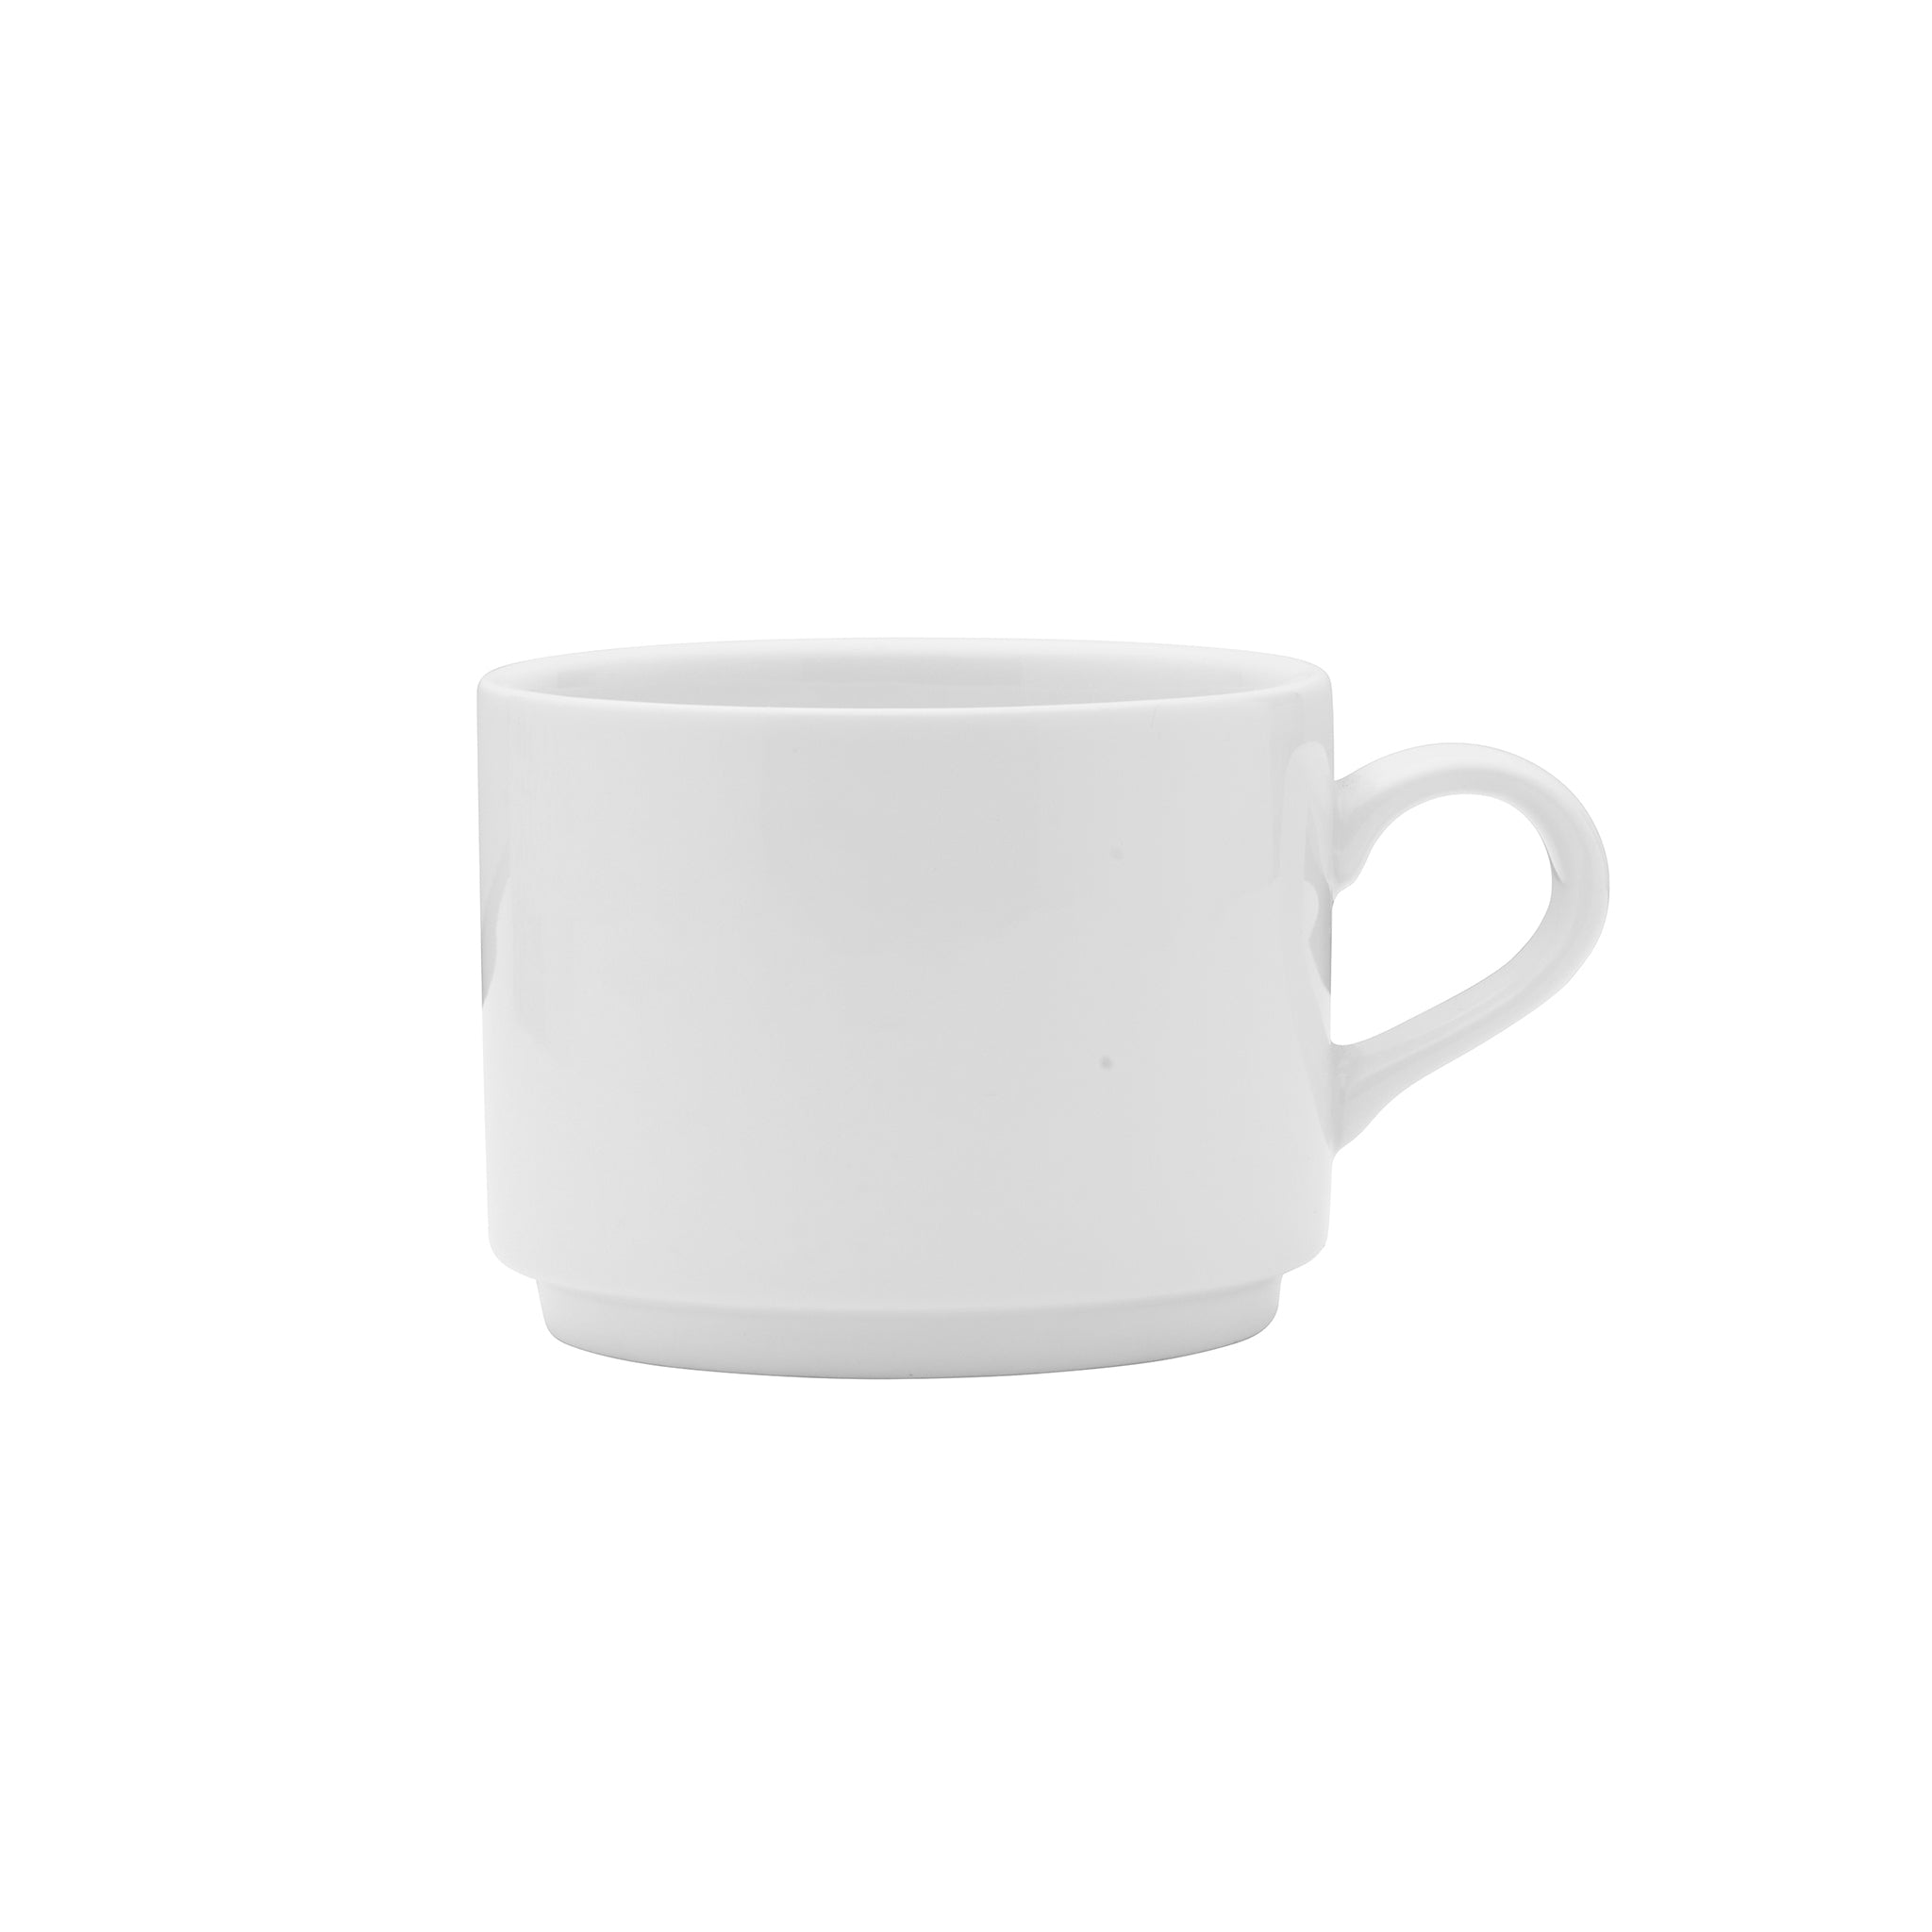 Galleria Porcelain Cup 4" / 6.1oz White